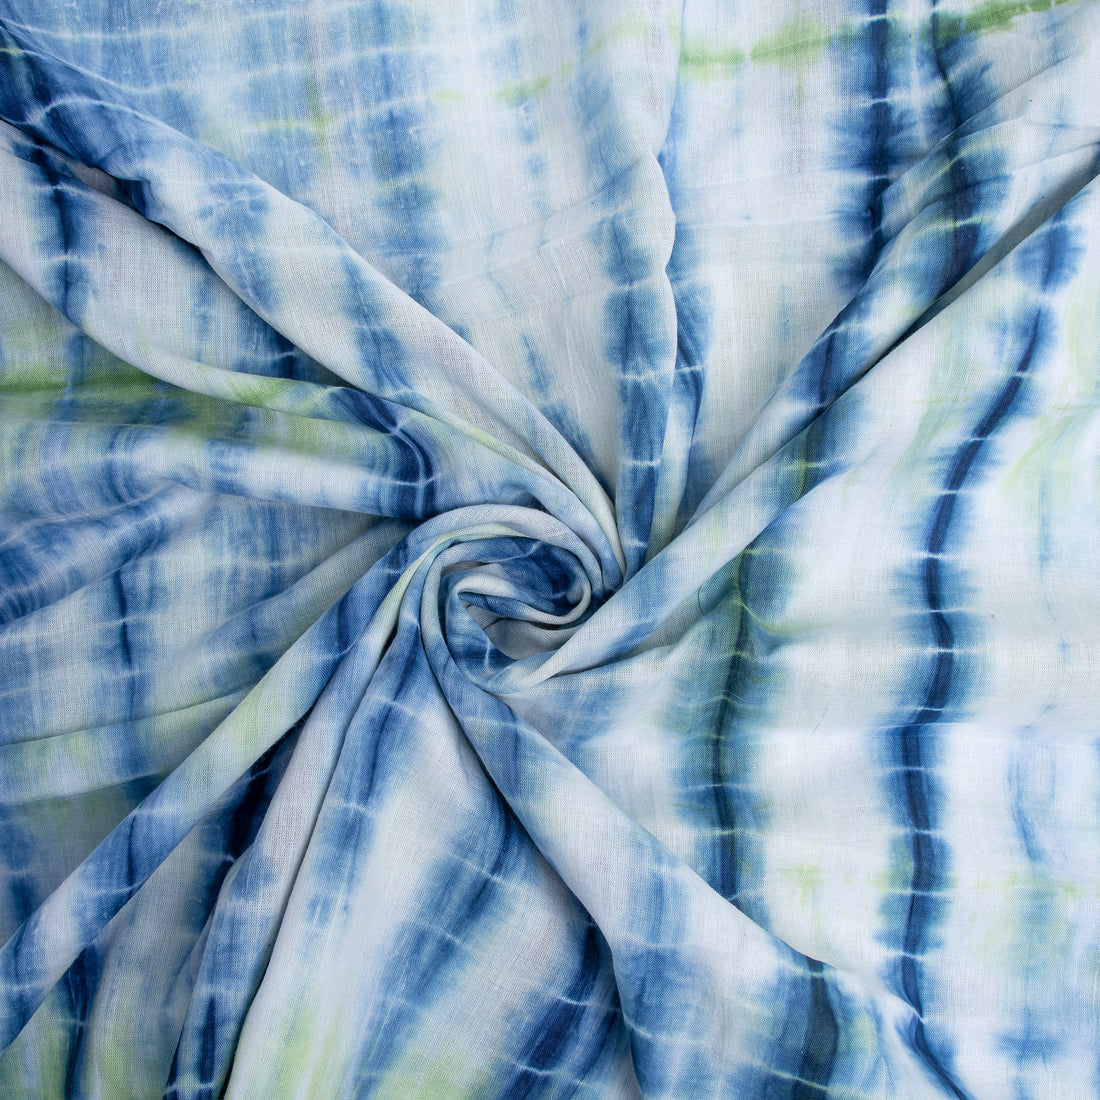 Handmade Blue Tie Dye Fabric For Home Decor Online